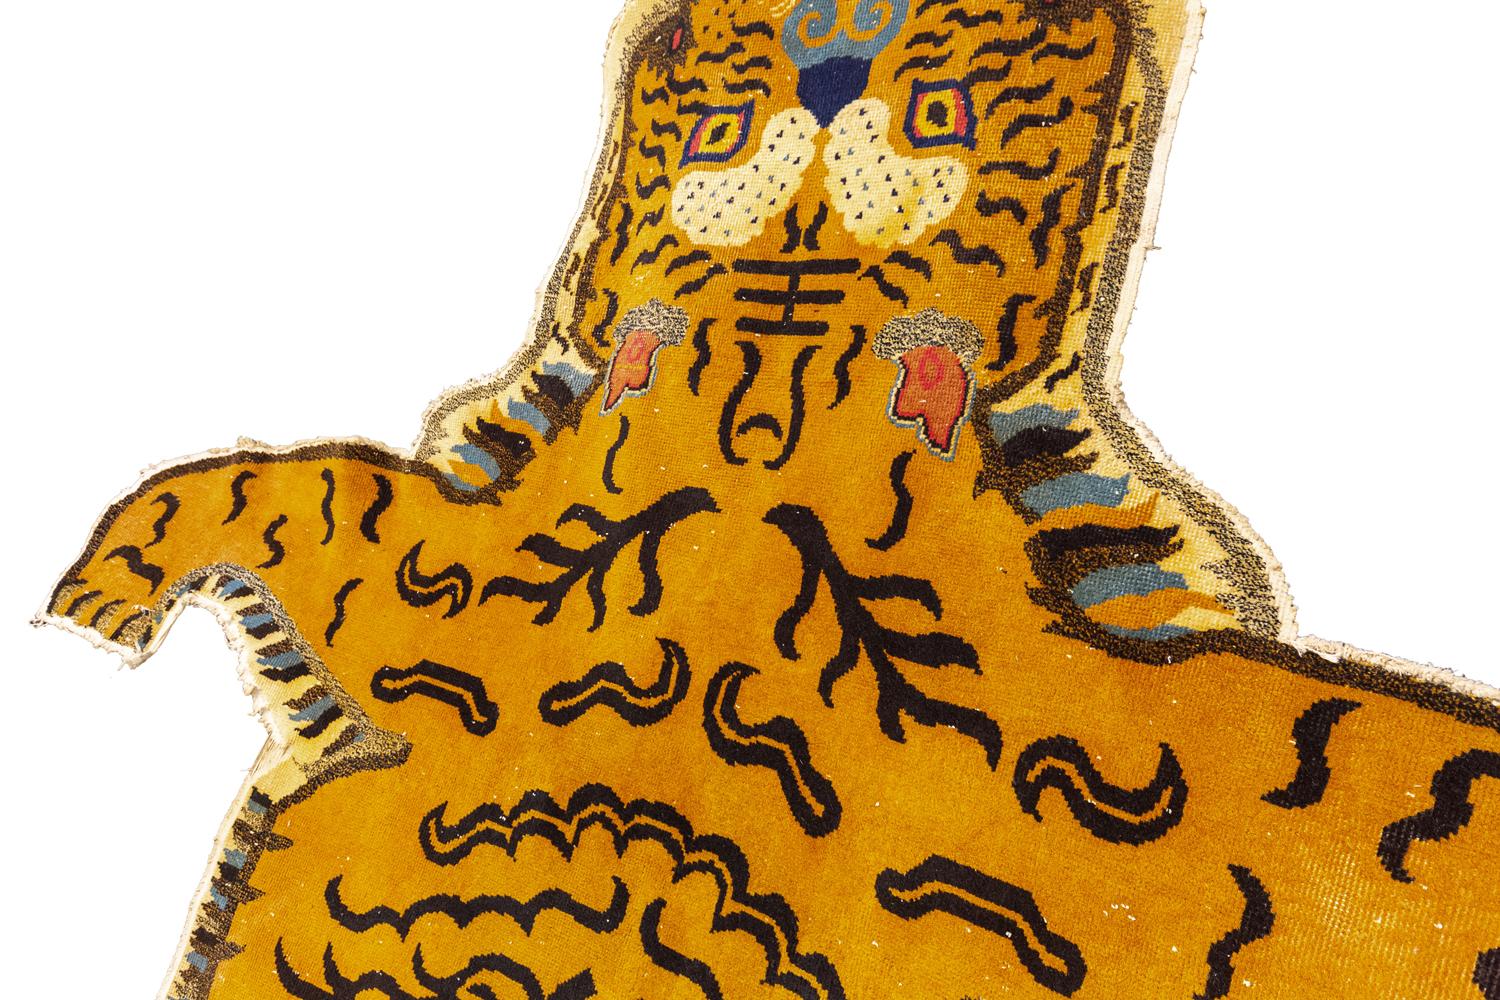 Antique Tibetan Tiger Rug with Shape of “TIGER”, 1900-1920 2